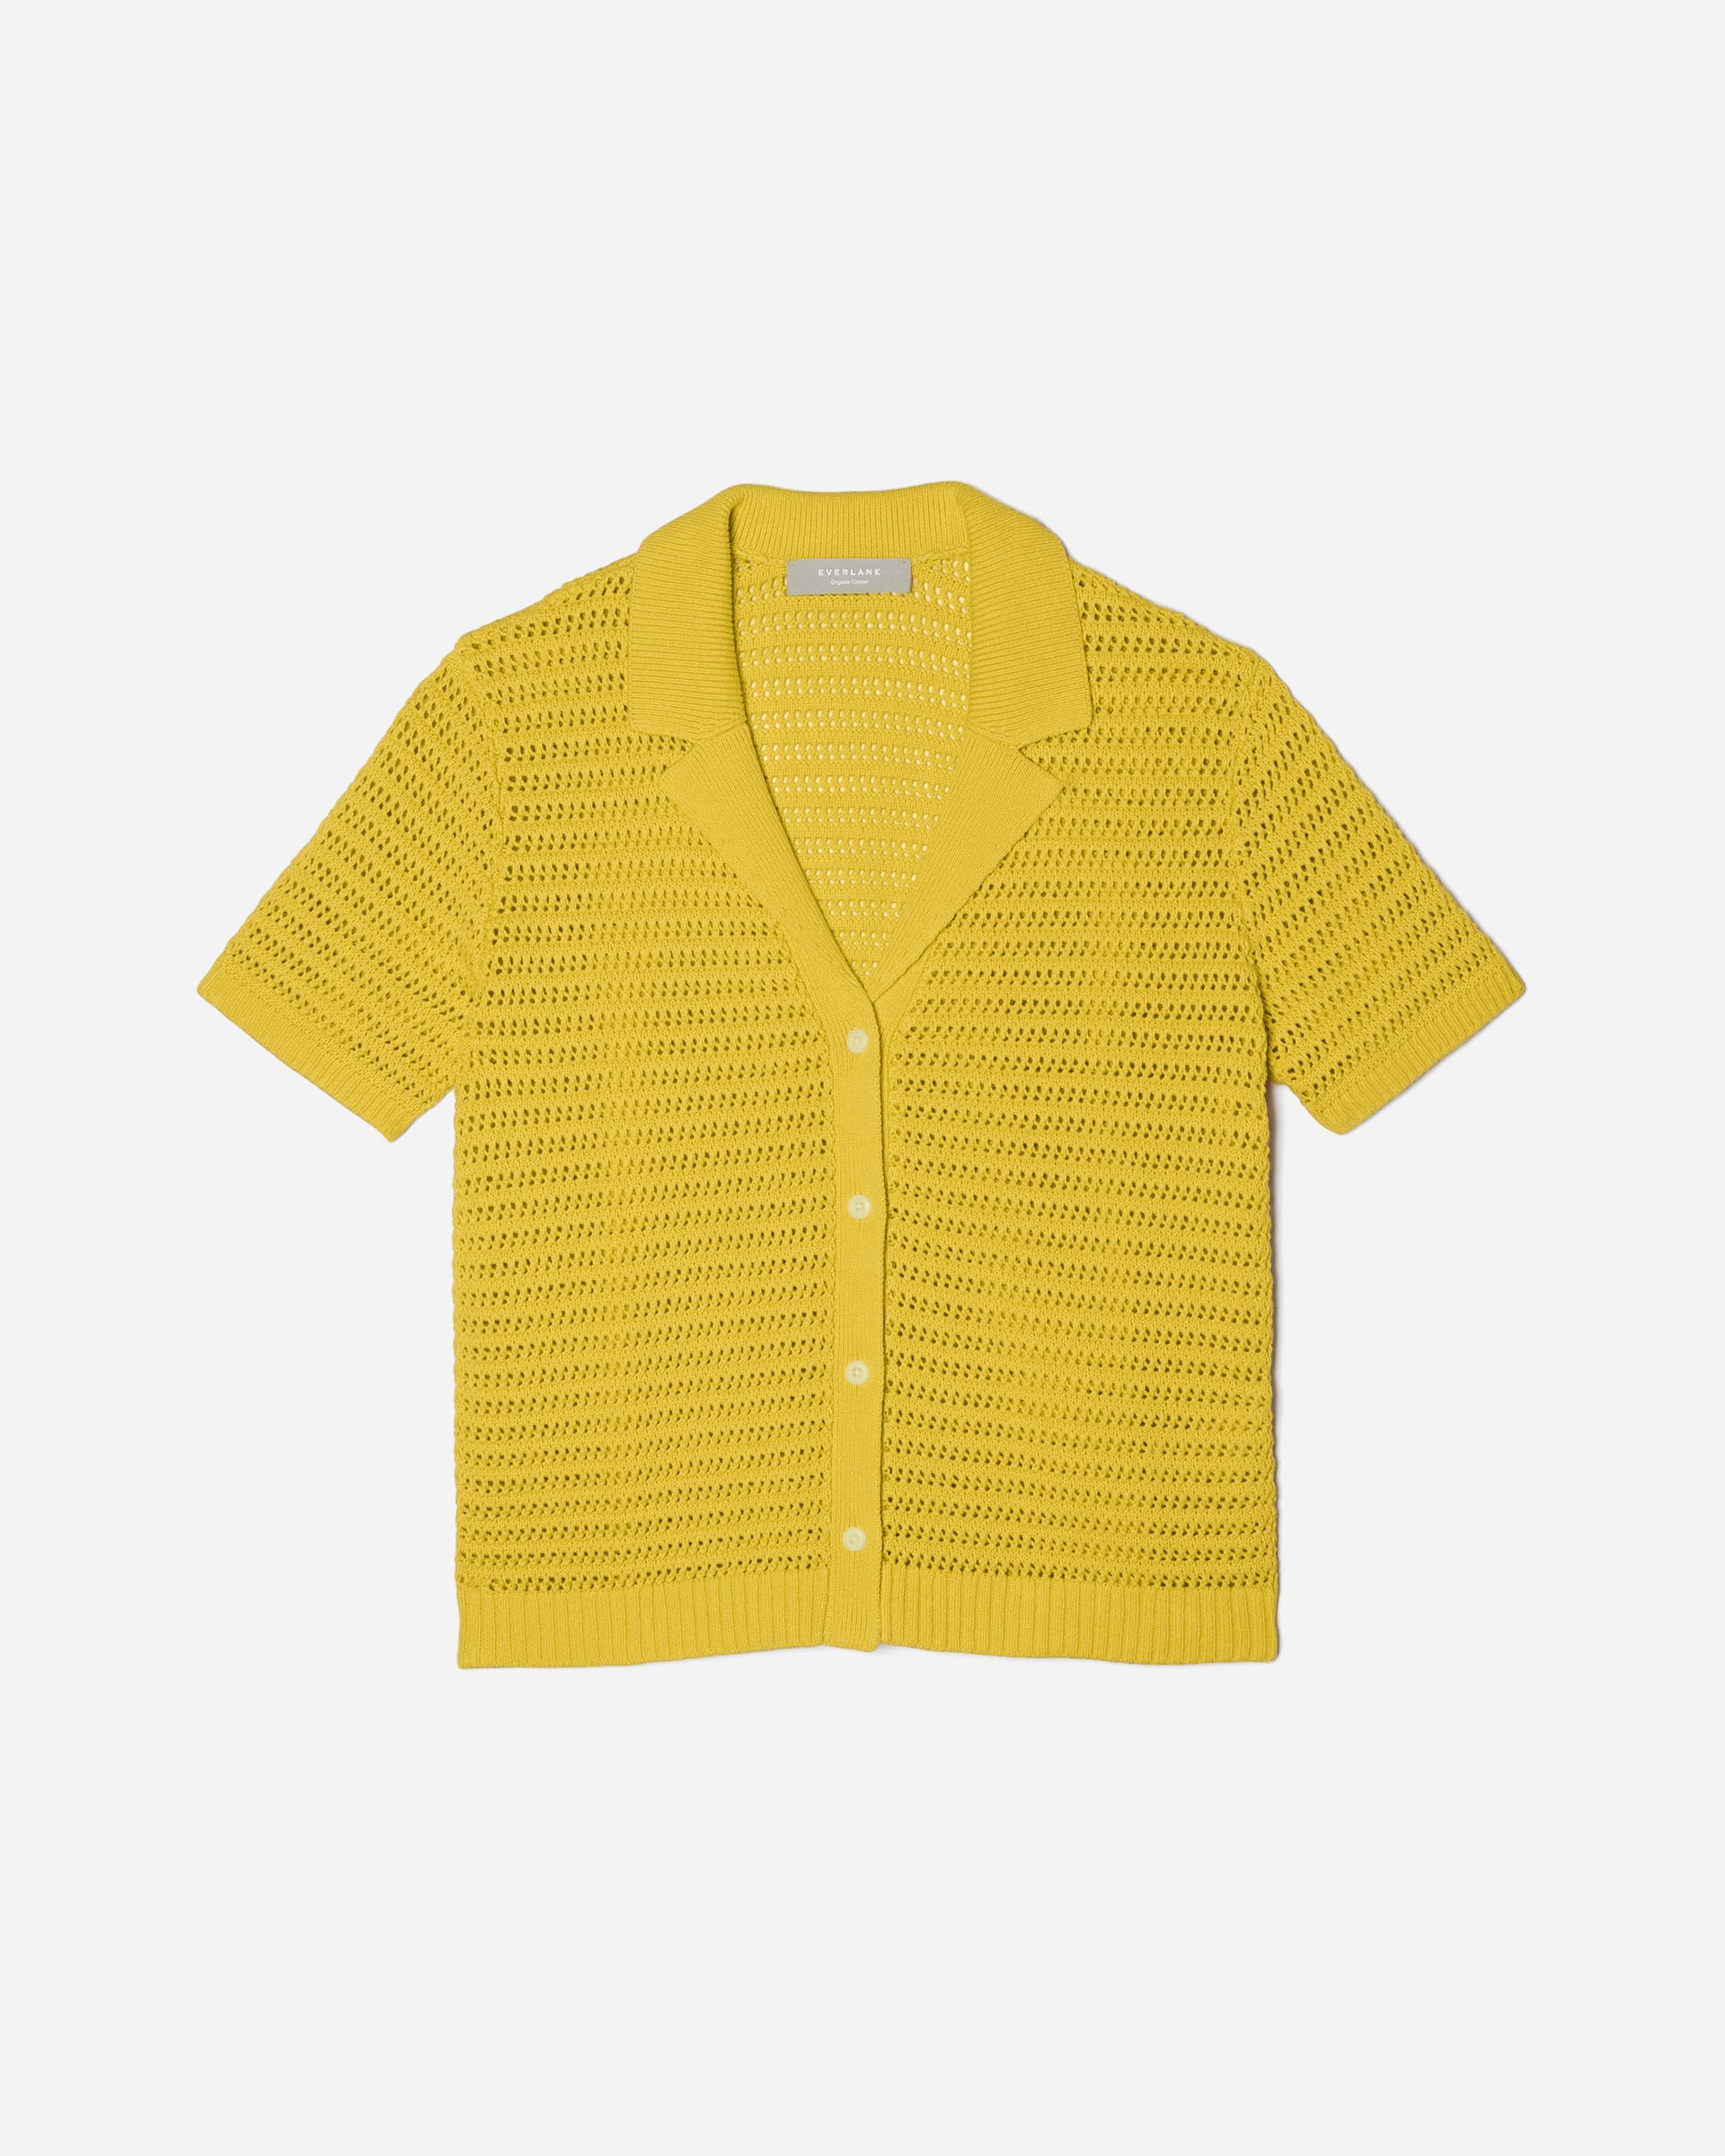 The Crochet Knit Polo Super Lemon – Everlane